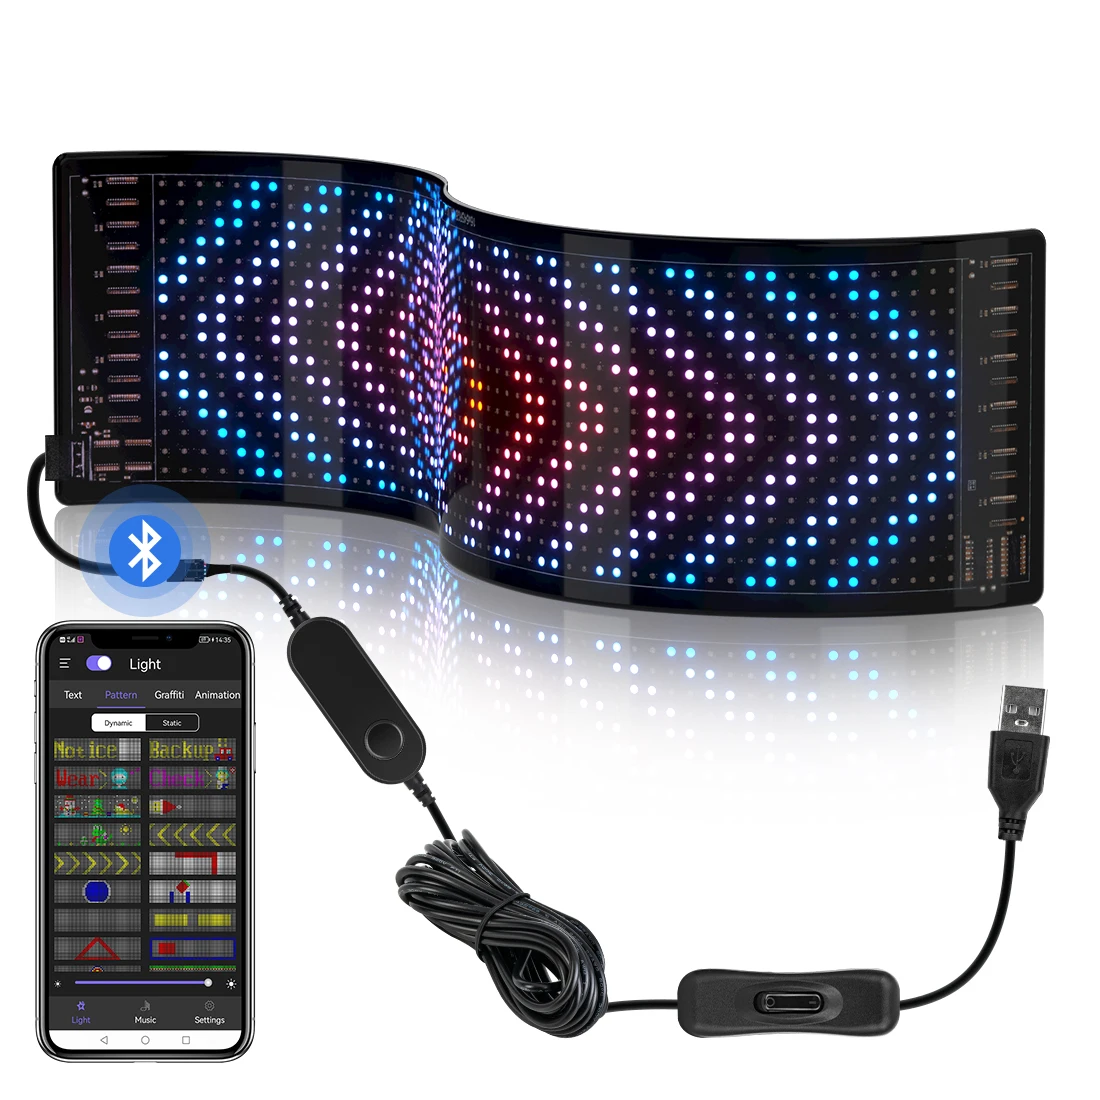 Panel Pixel Bluetooth Smart APP Control Addressable RGB Scrolling Display DIY Animation Music Rhythm VDIKKS Flexible LED Matrix Panel 14.6x3.6” USB 5V LED Car Sign 